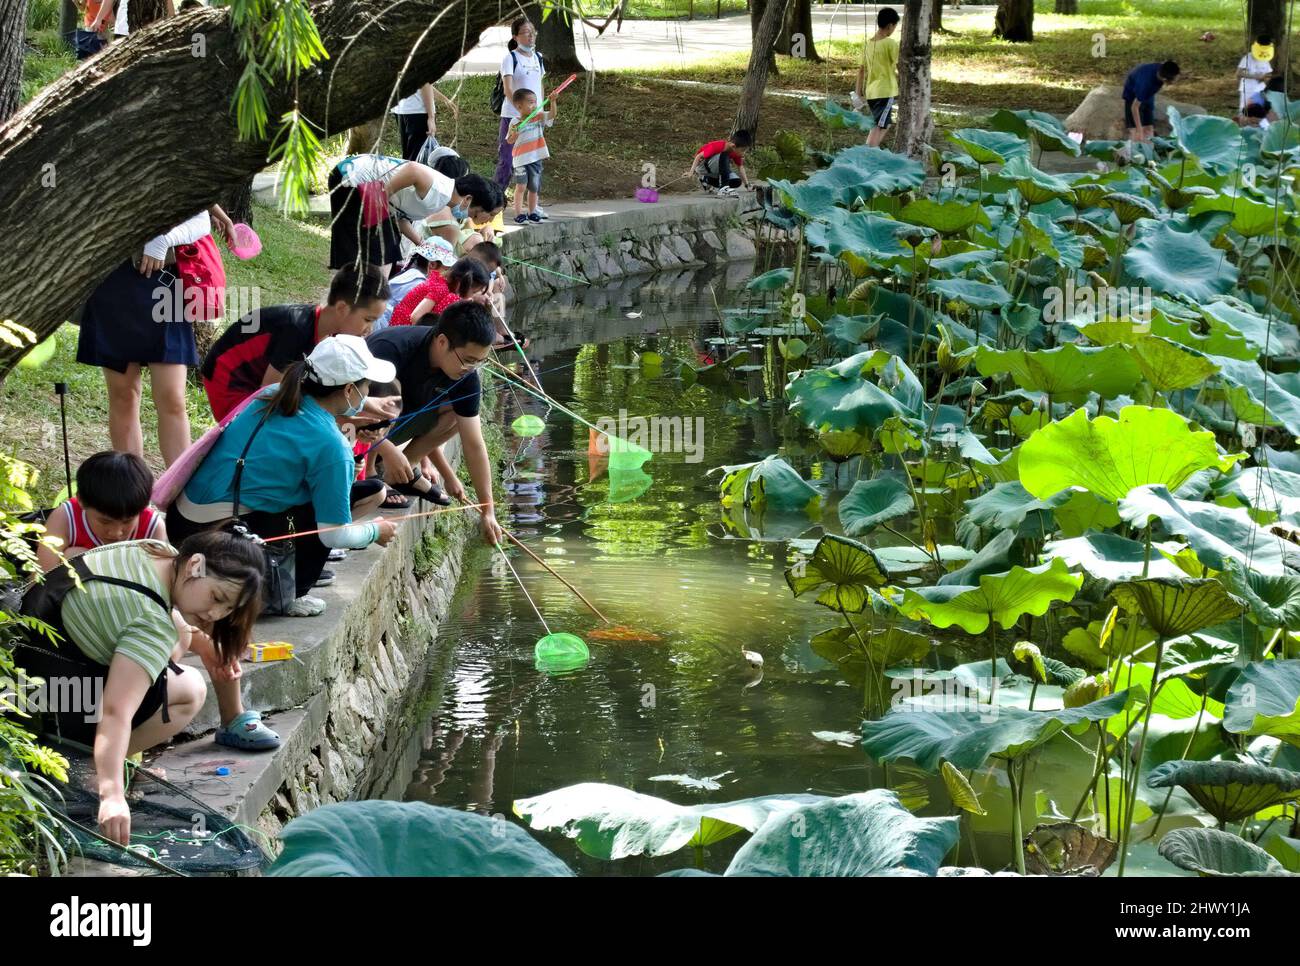 Weekend fun fishing in a pond in Shenzhen, China Stock Photo